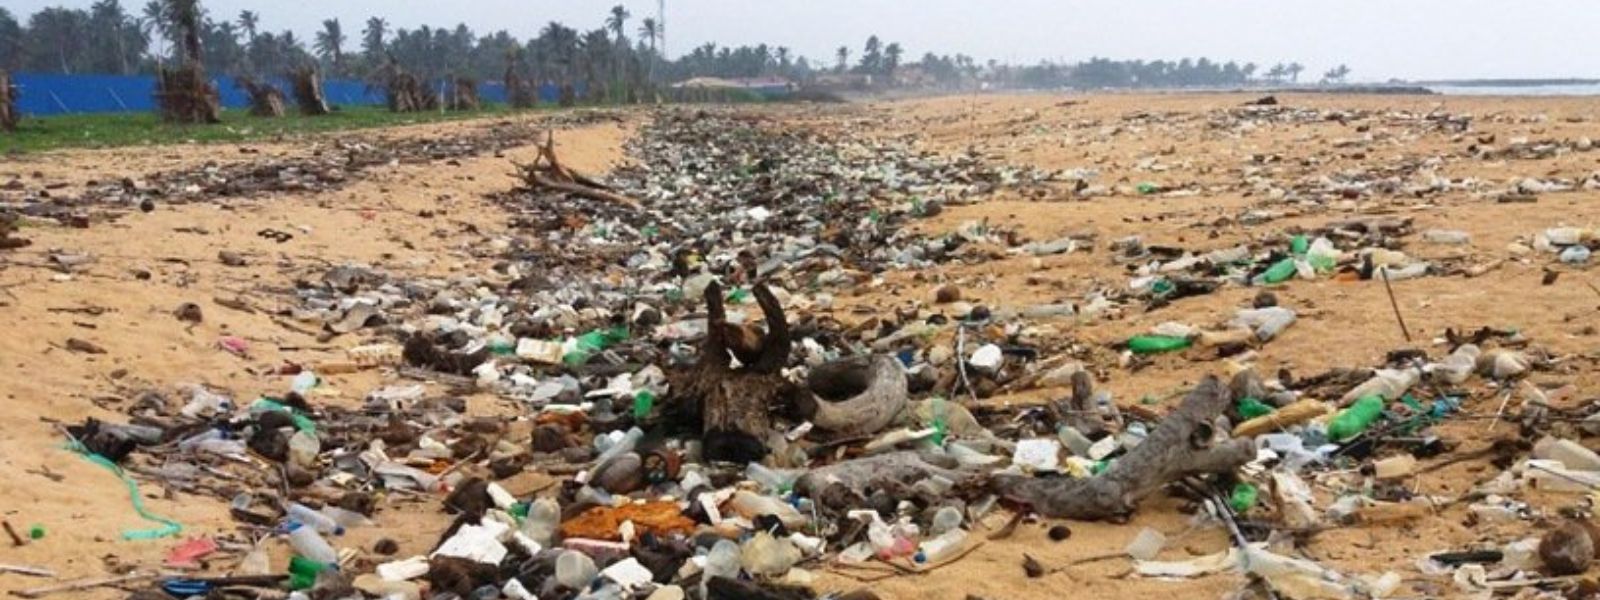 SL Nets 180 Polluters in Environmental Blitz